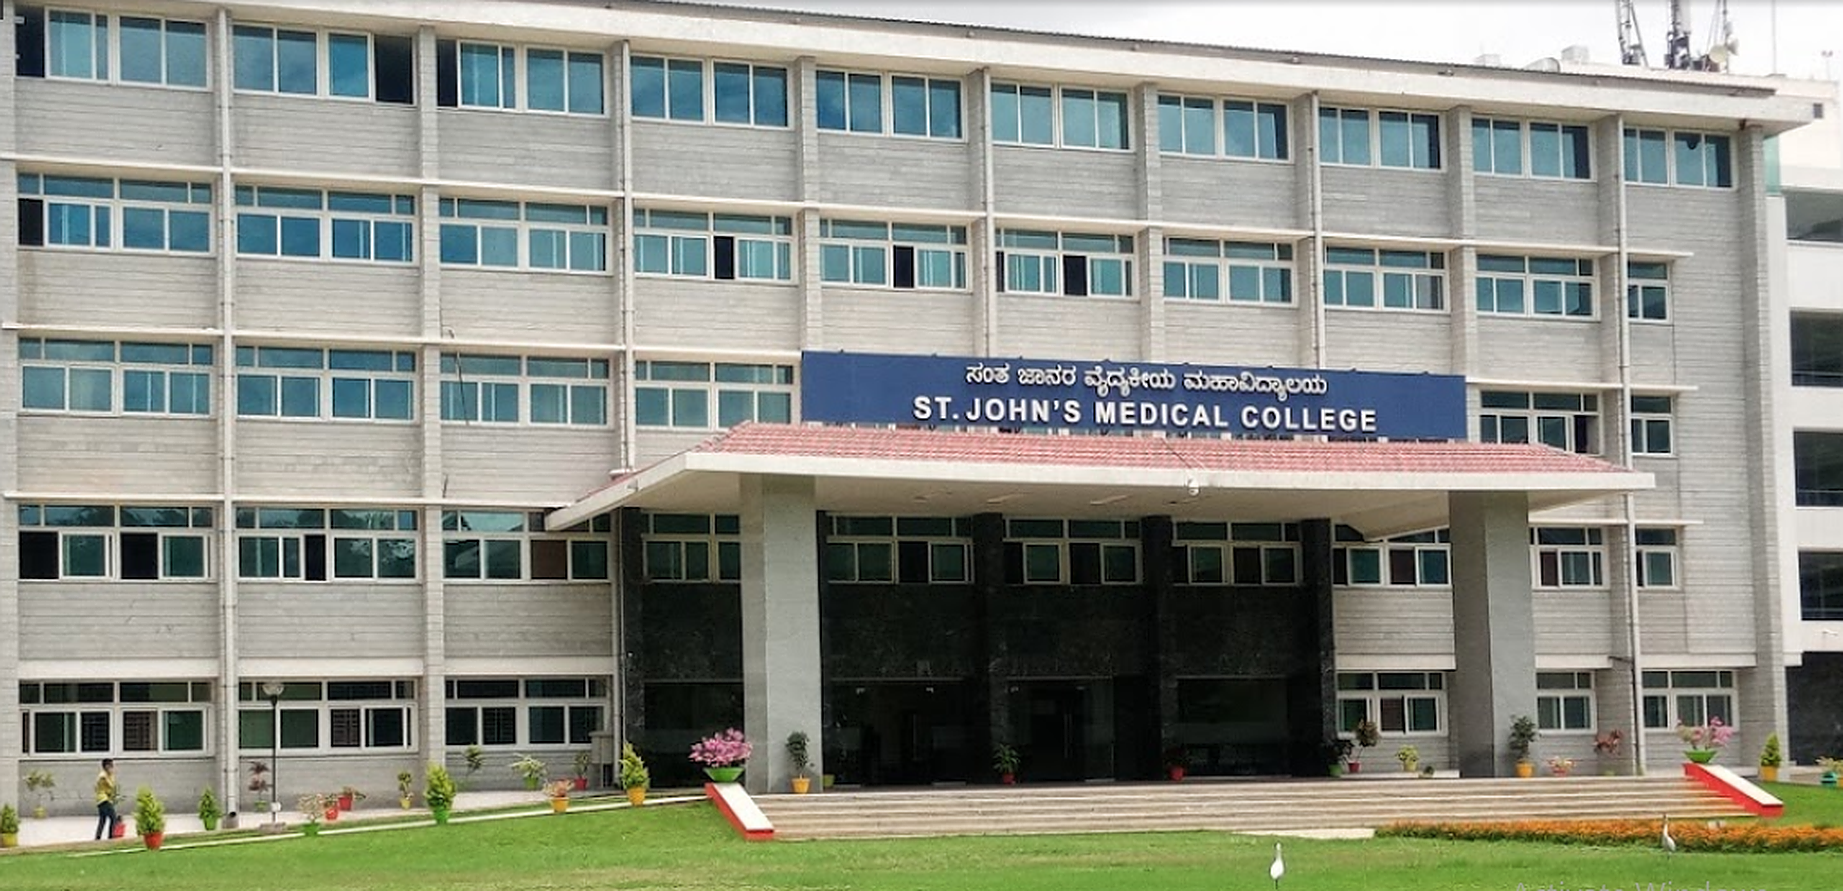 St. John's Medical College